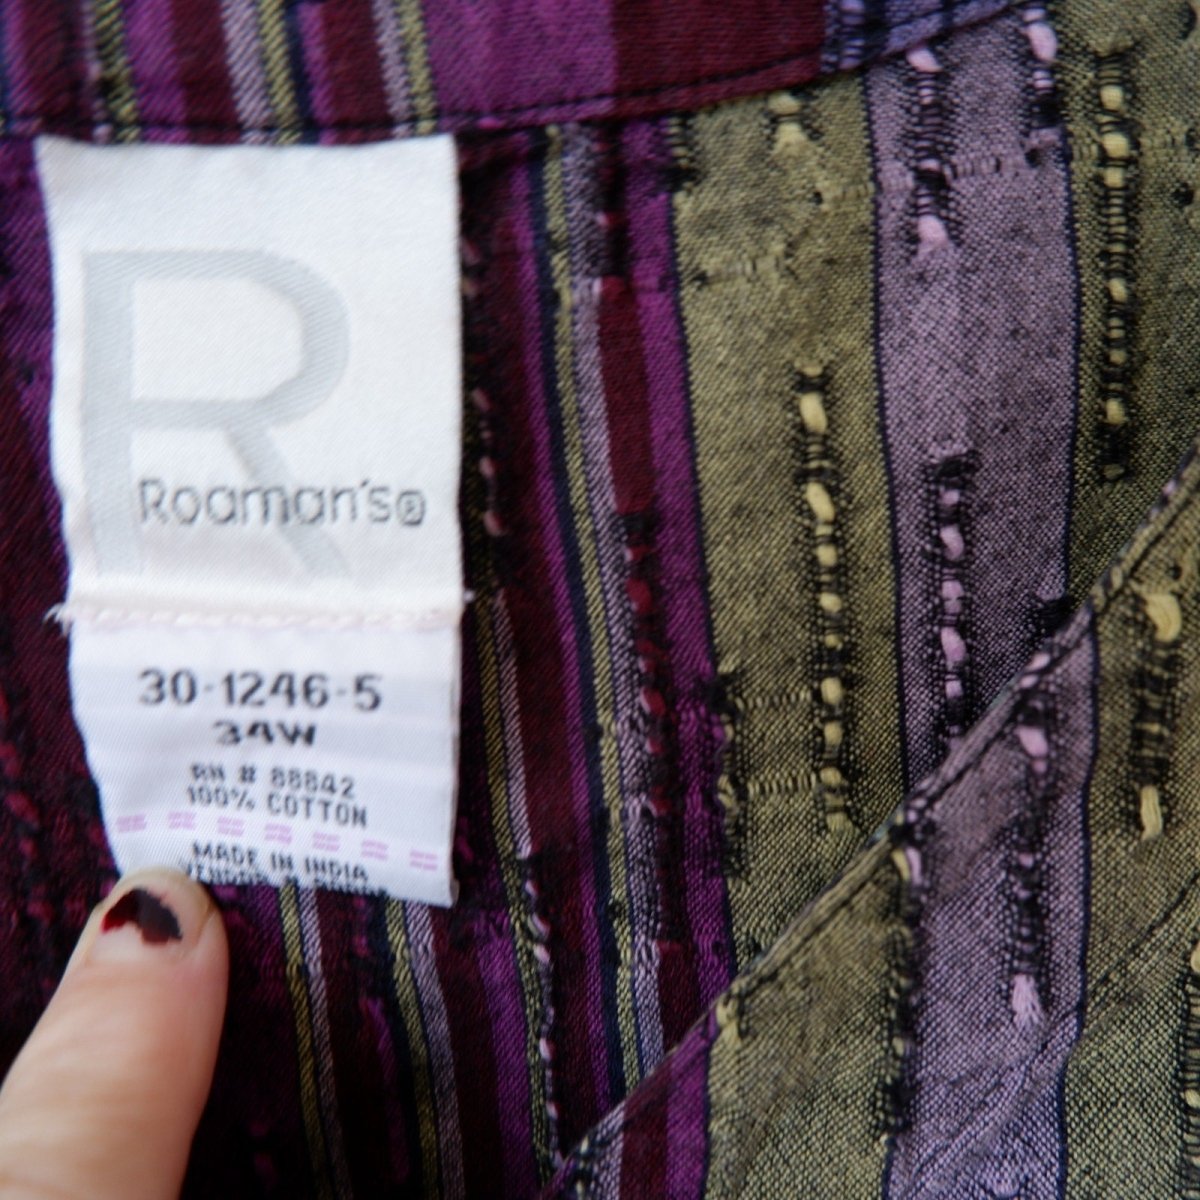 Vintage 90s Purple Cotton Boho Blouse Size 34W 4X/5X Women - themallvintage The Mall Vintage Boho New Arrival Plus Size